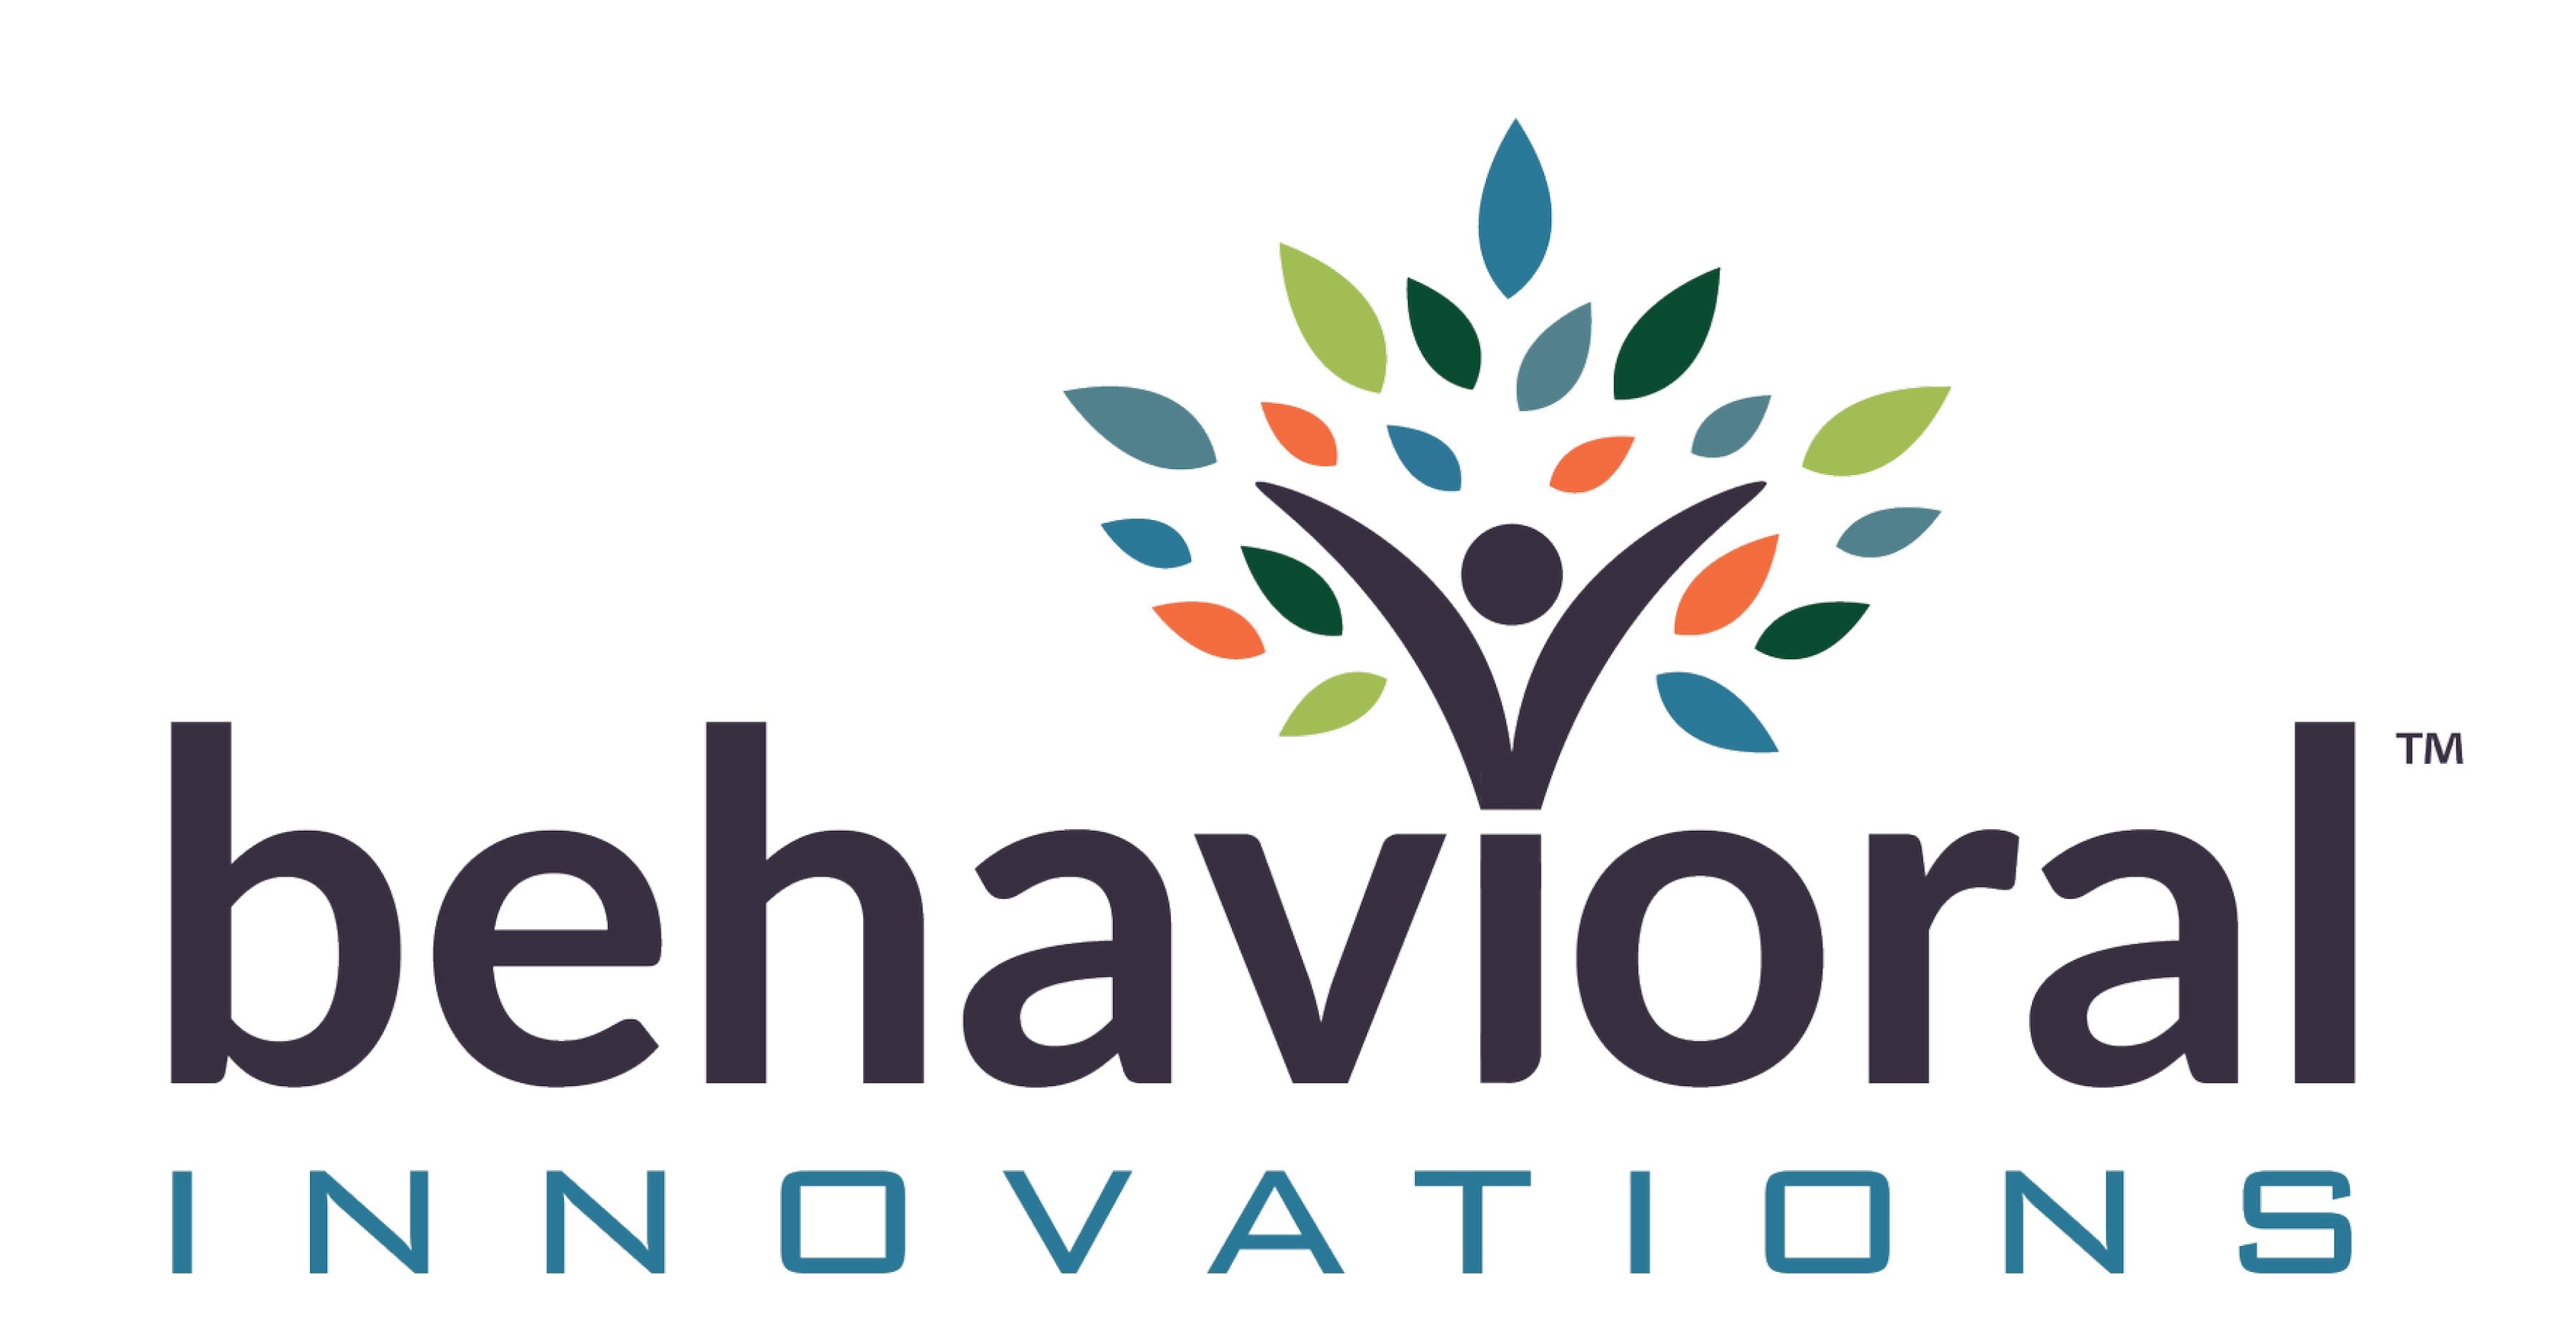 5 Behavioral Innovations